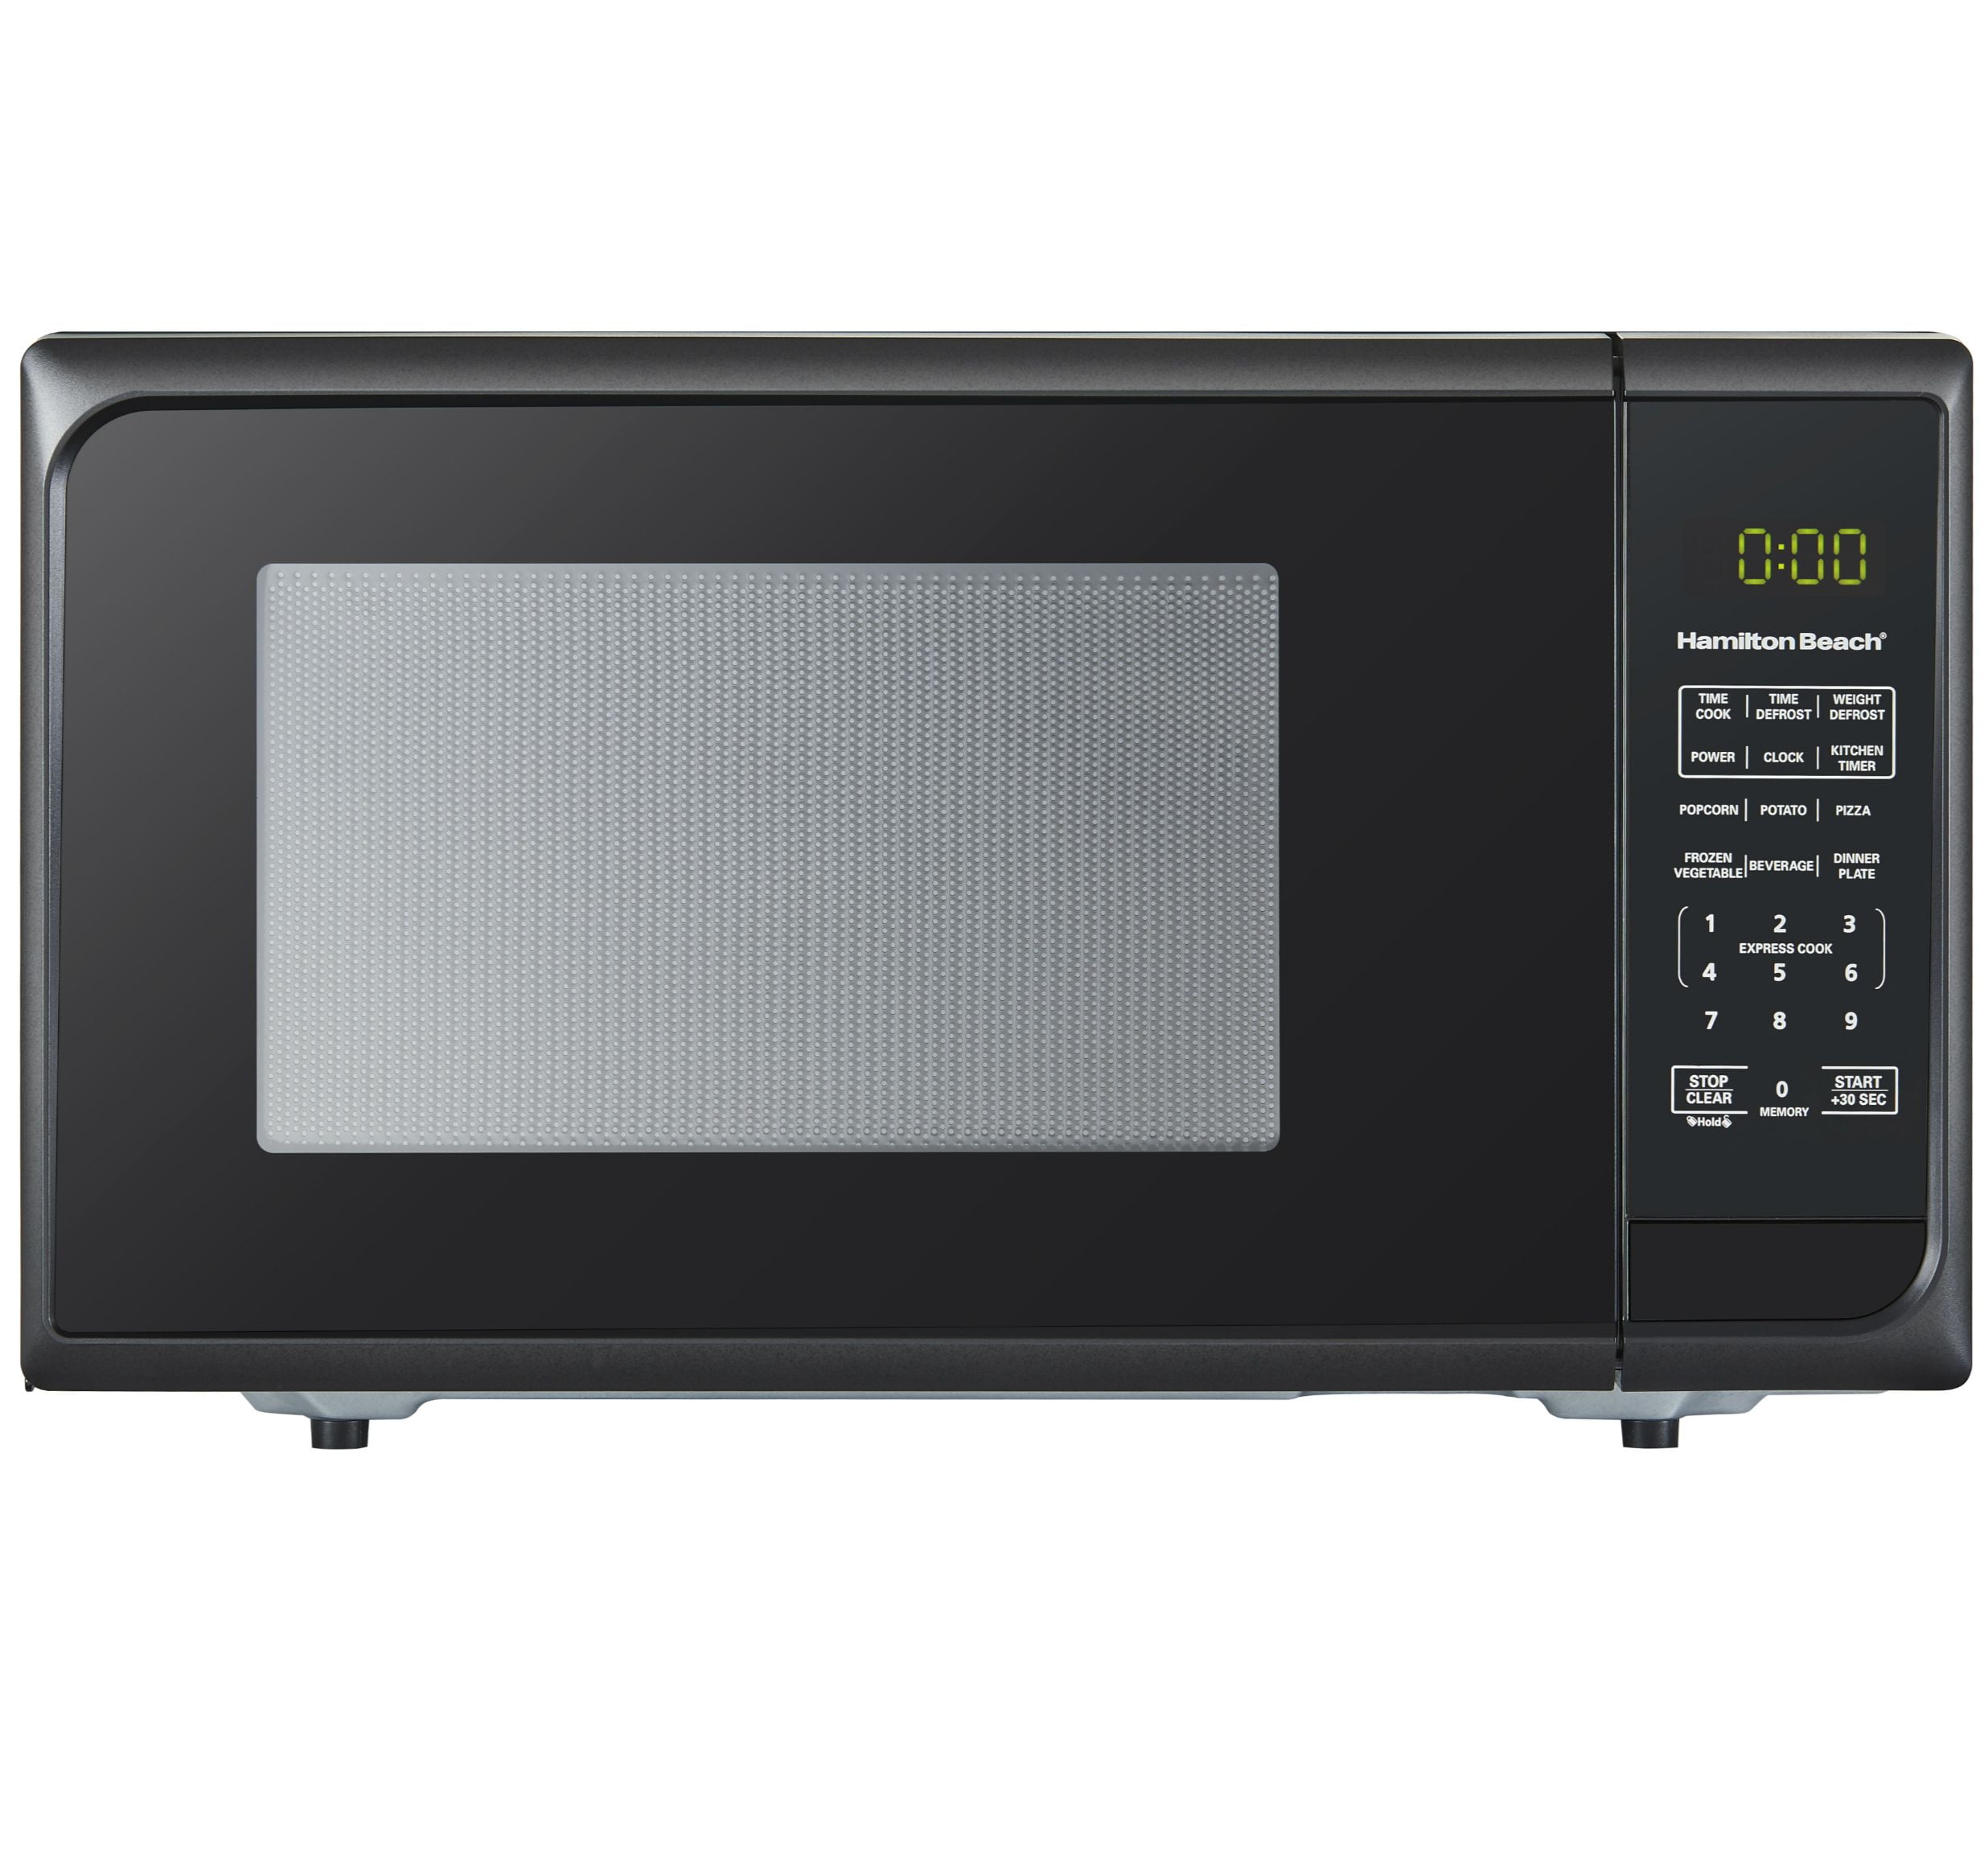 Panasonic NN-SB646S 1.3 cu ft Microwave Oven Stainless Steel Countertop 